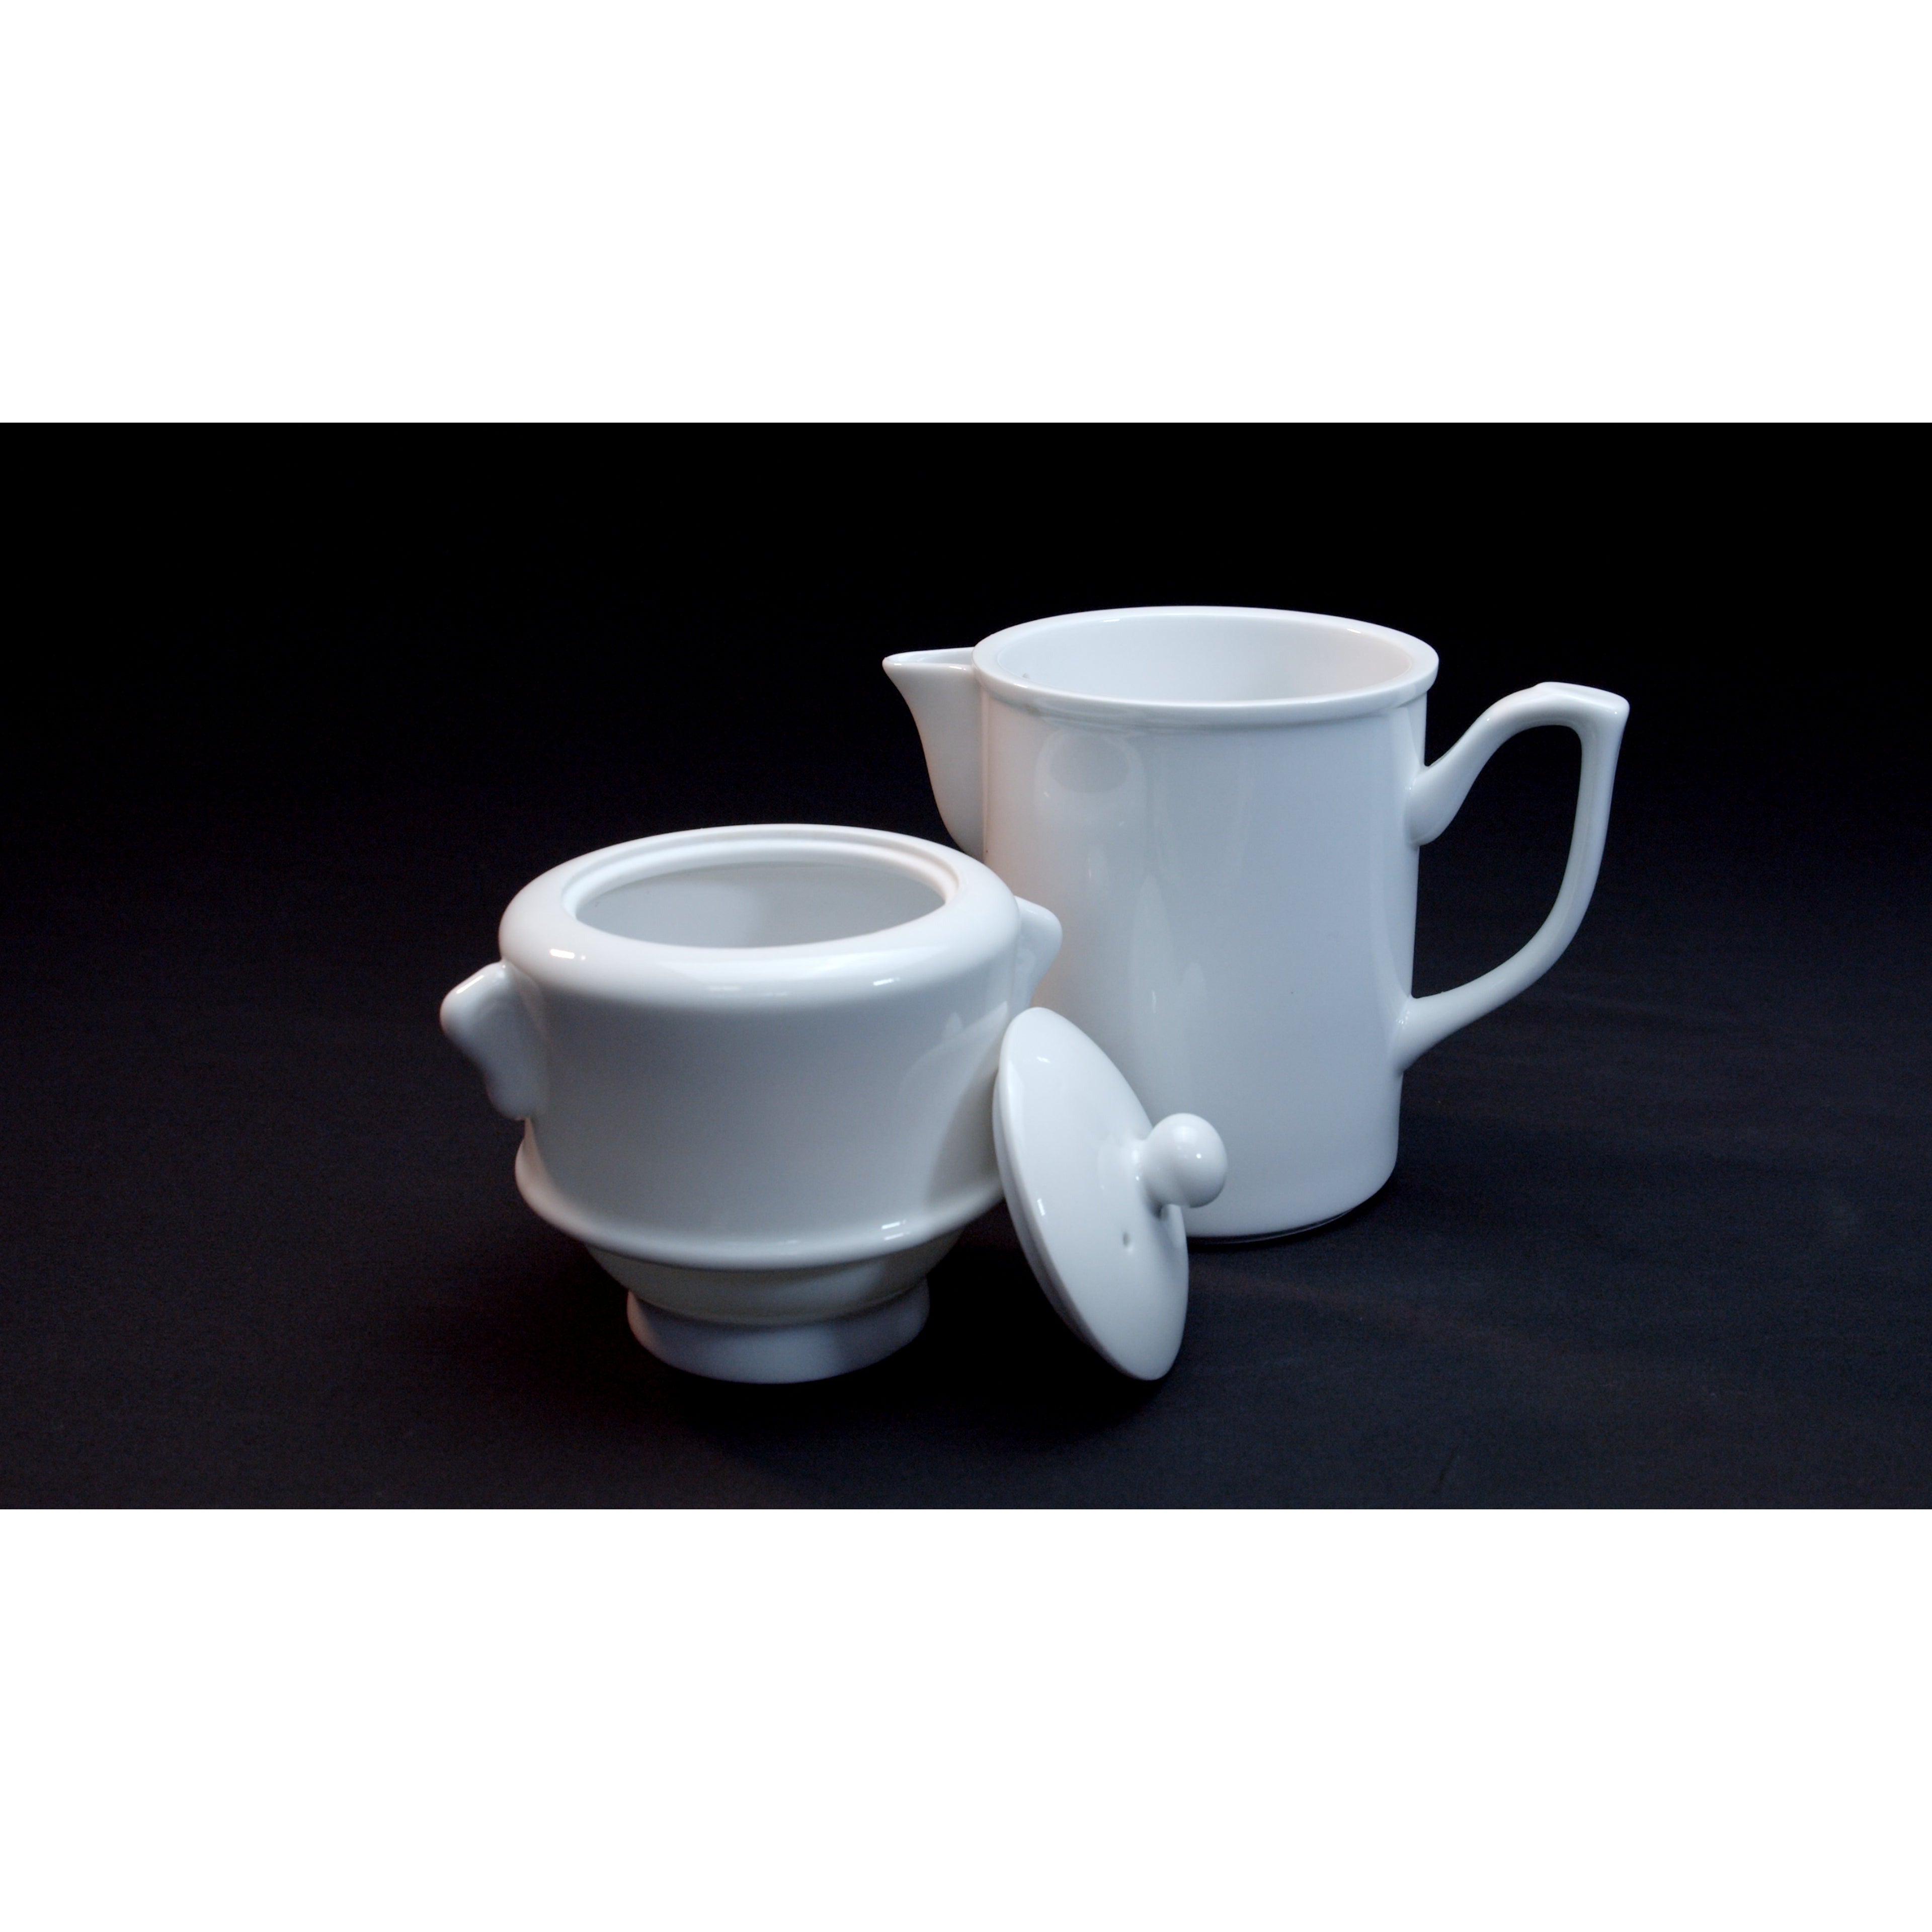 Porcelain Teapot, Auto Tea Steeper